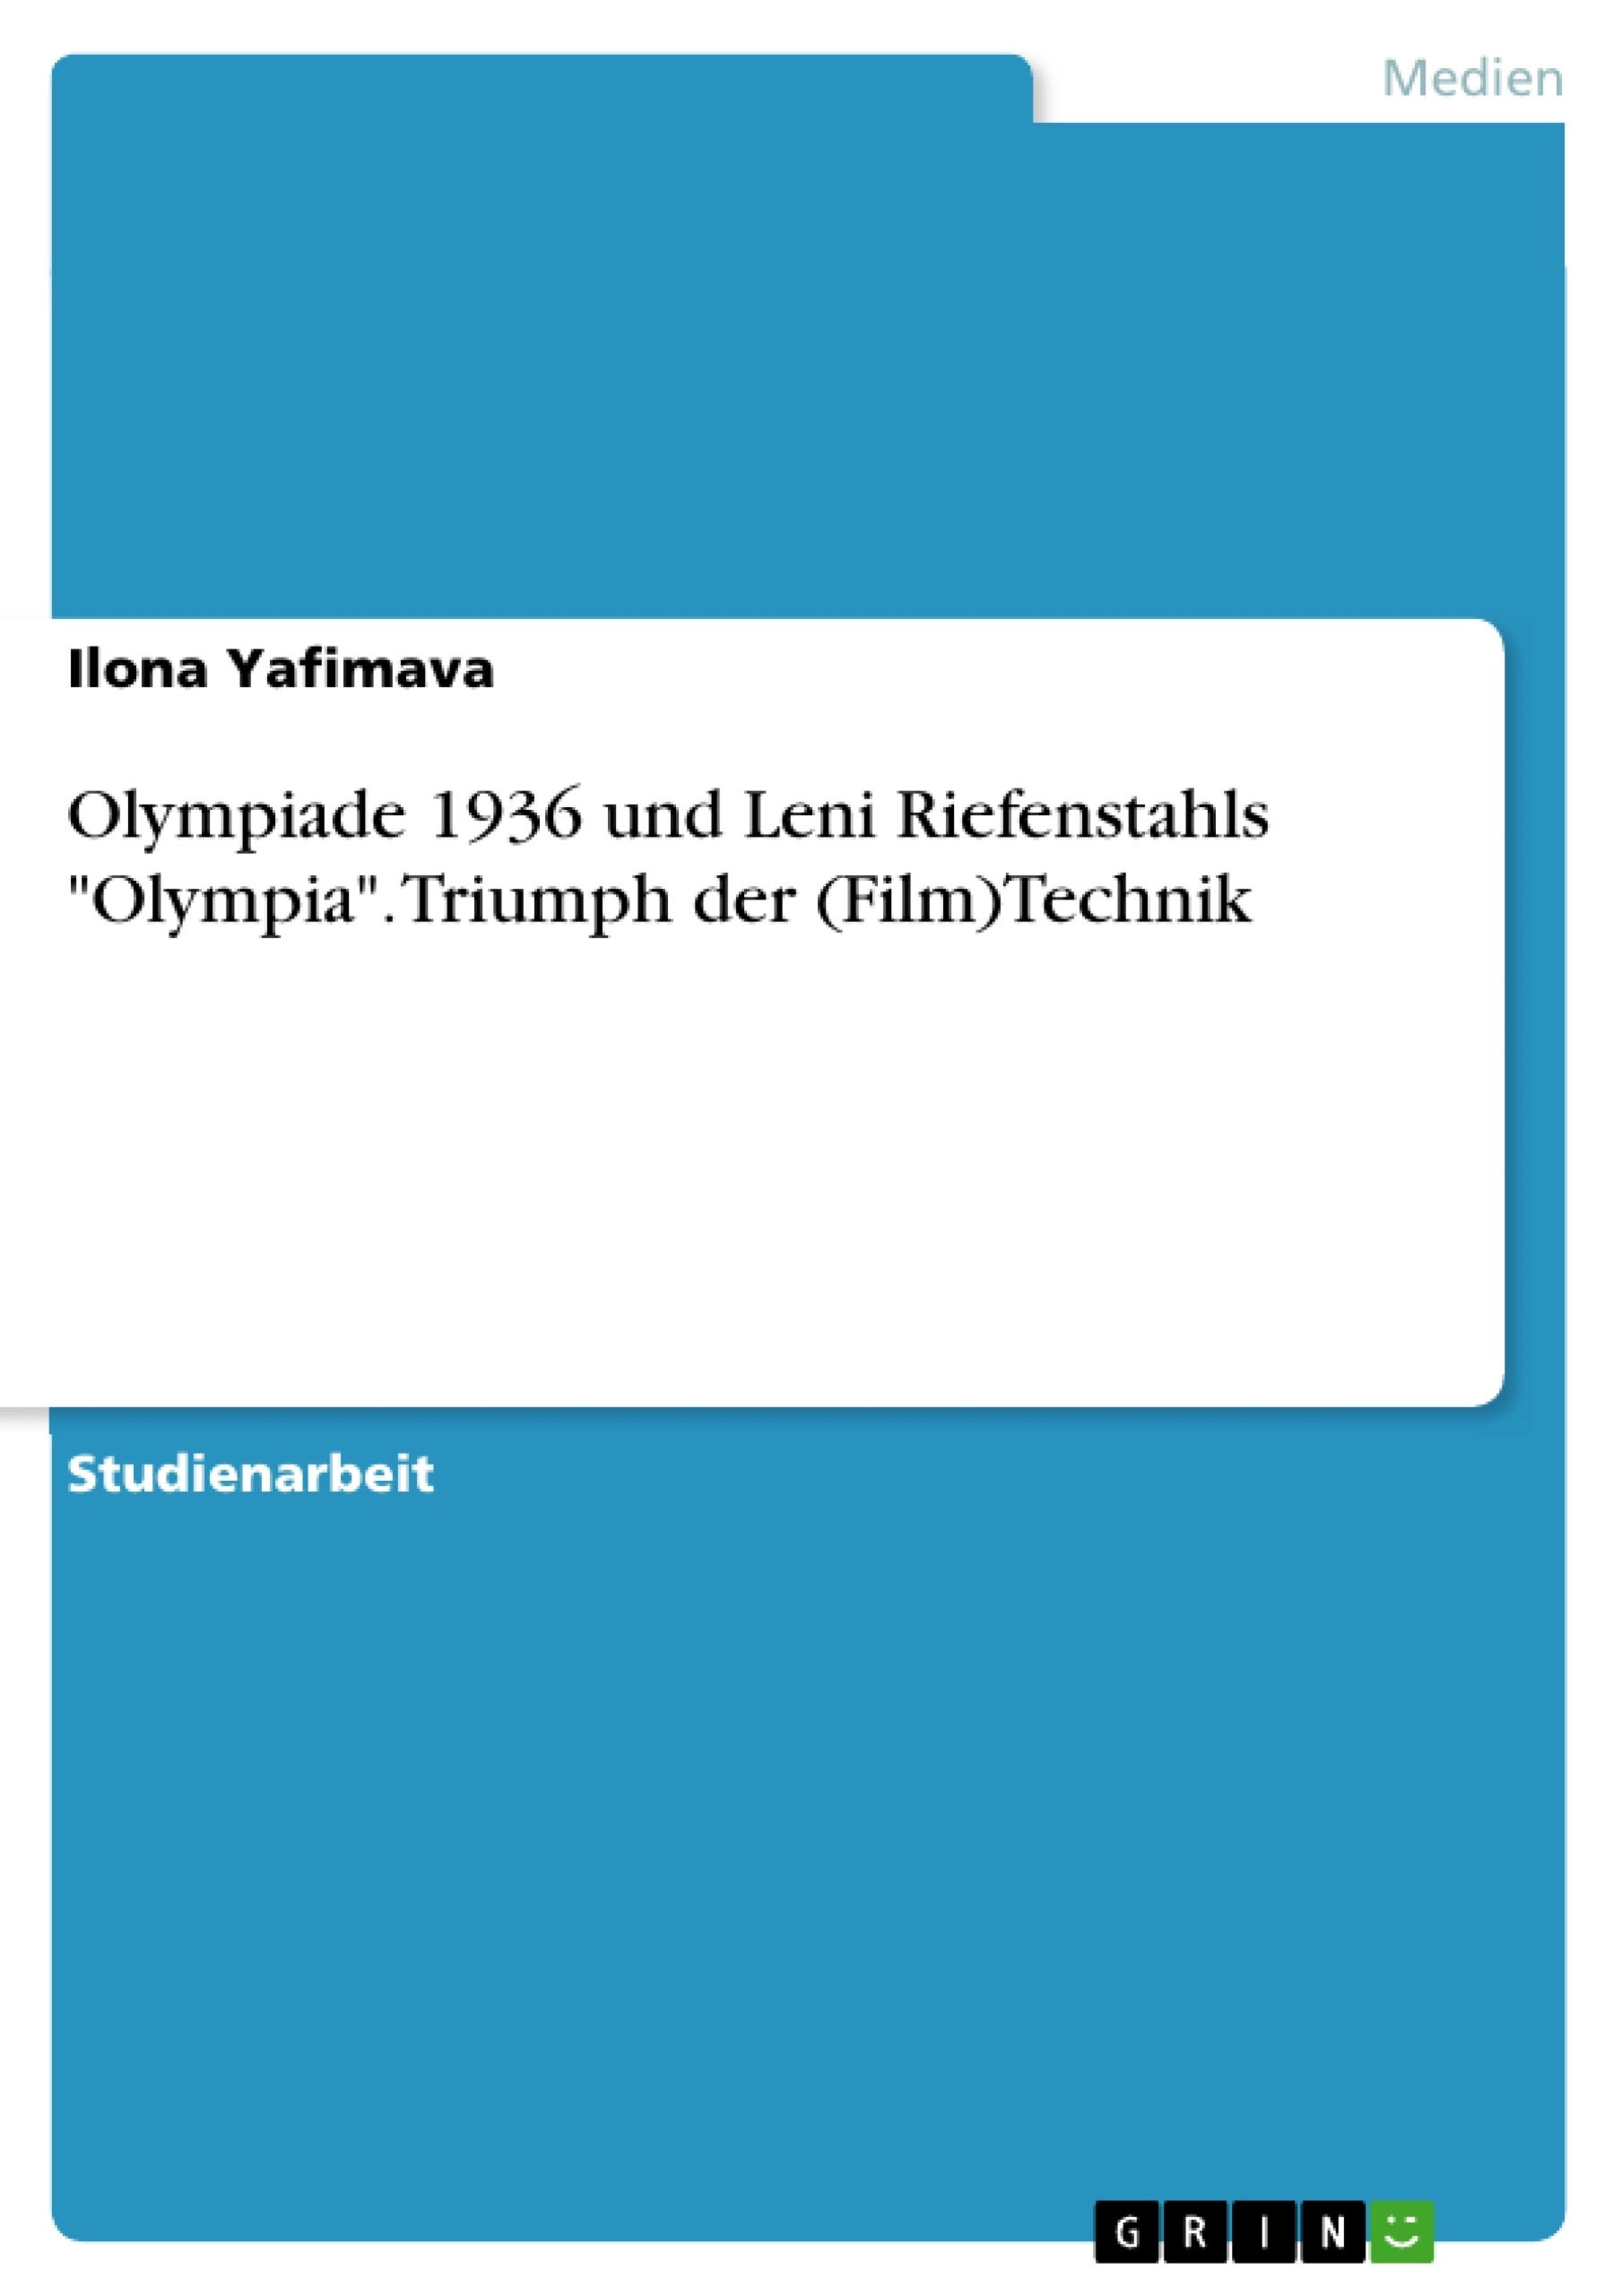 Titre: Olympiade 1936 und Leni Riefenstahls "Olympia". Triumph der (Film)Technik